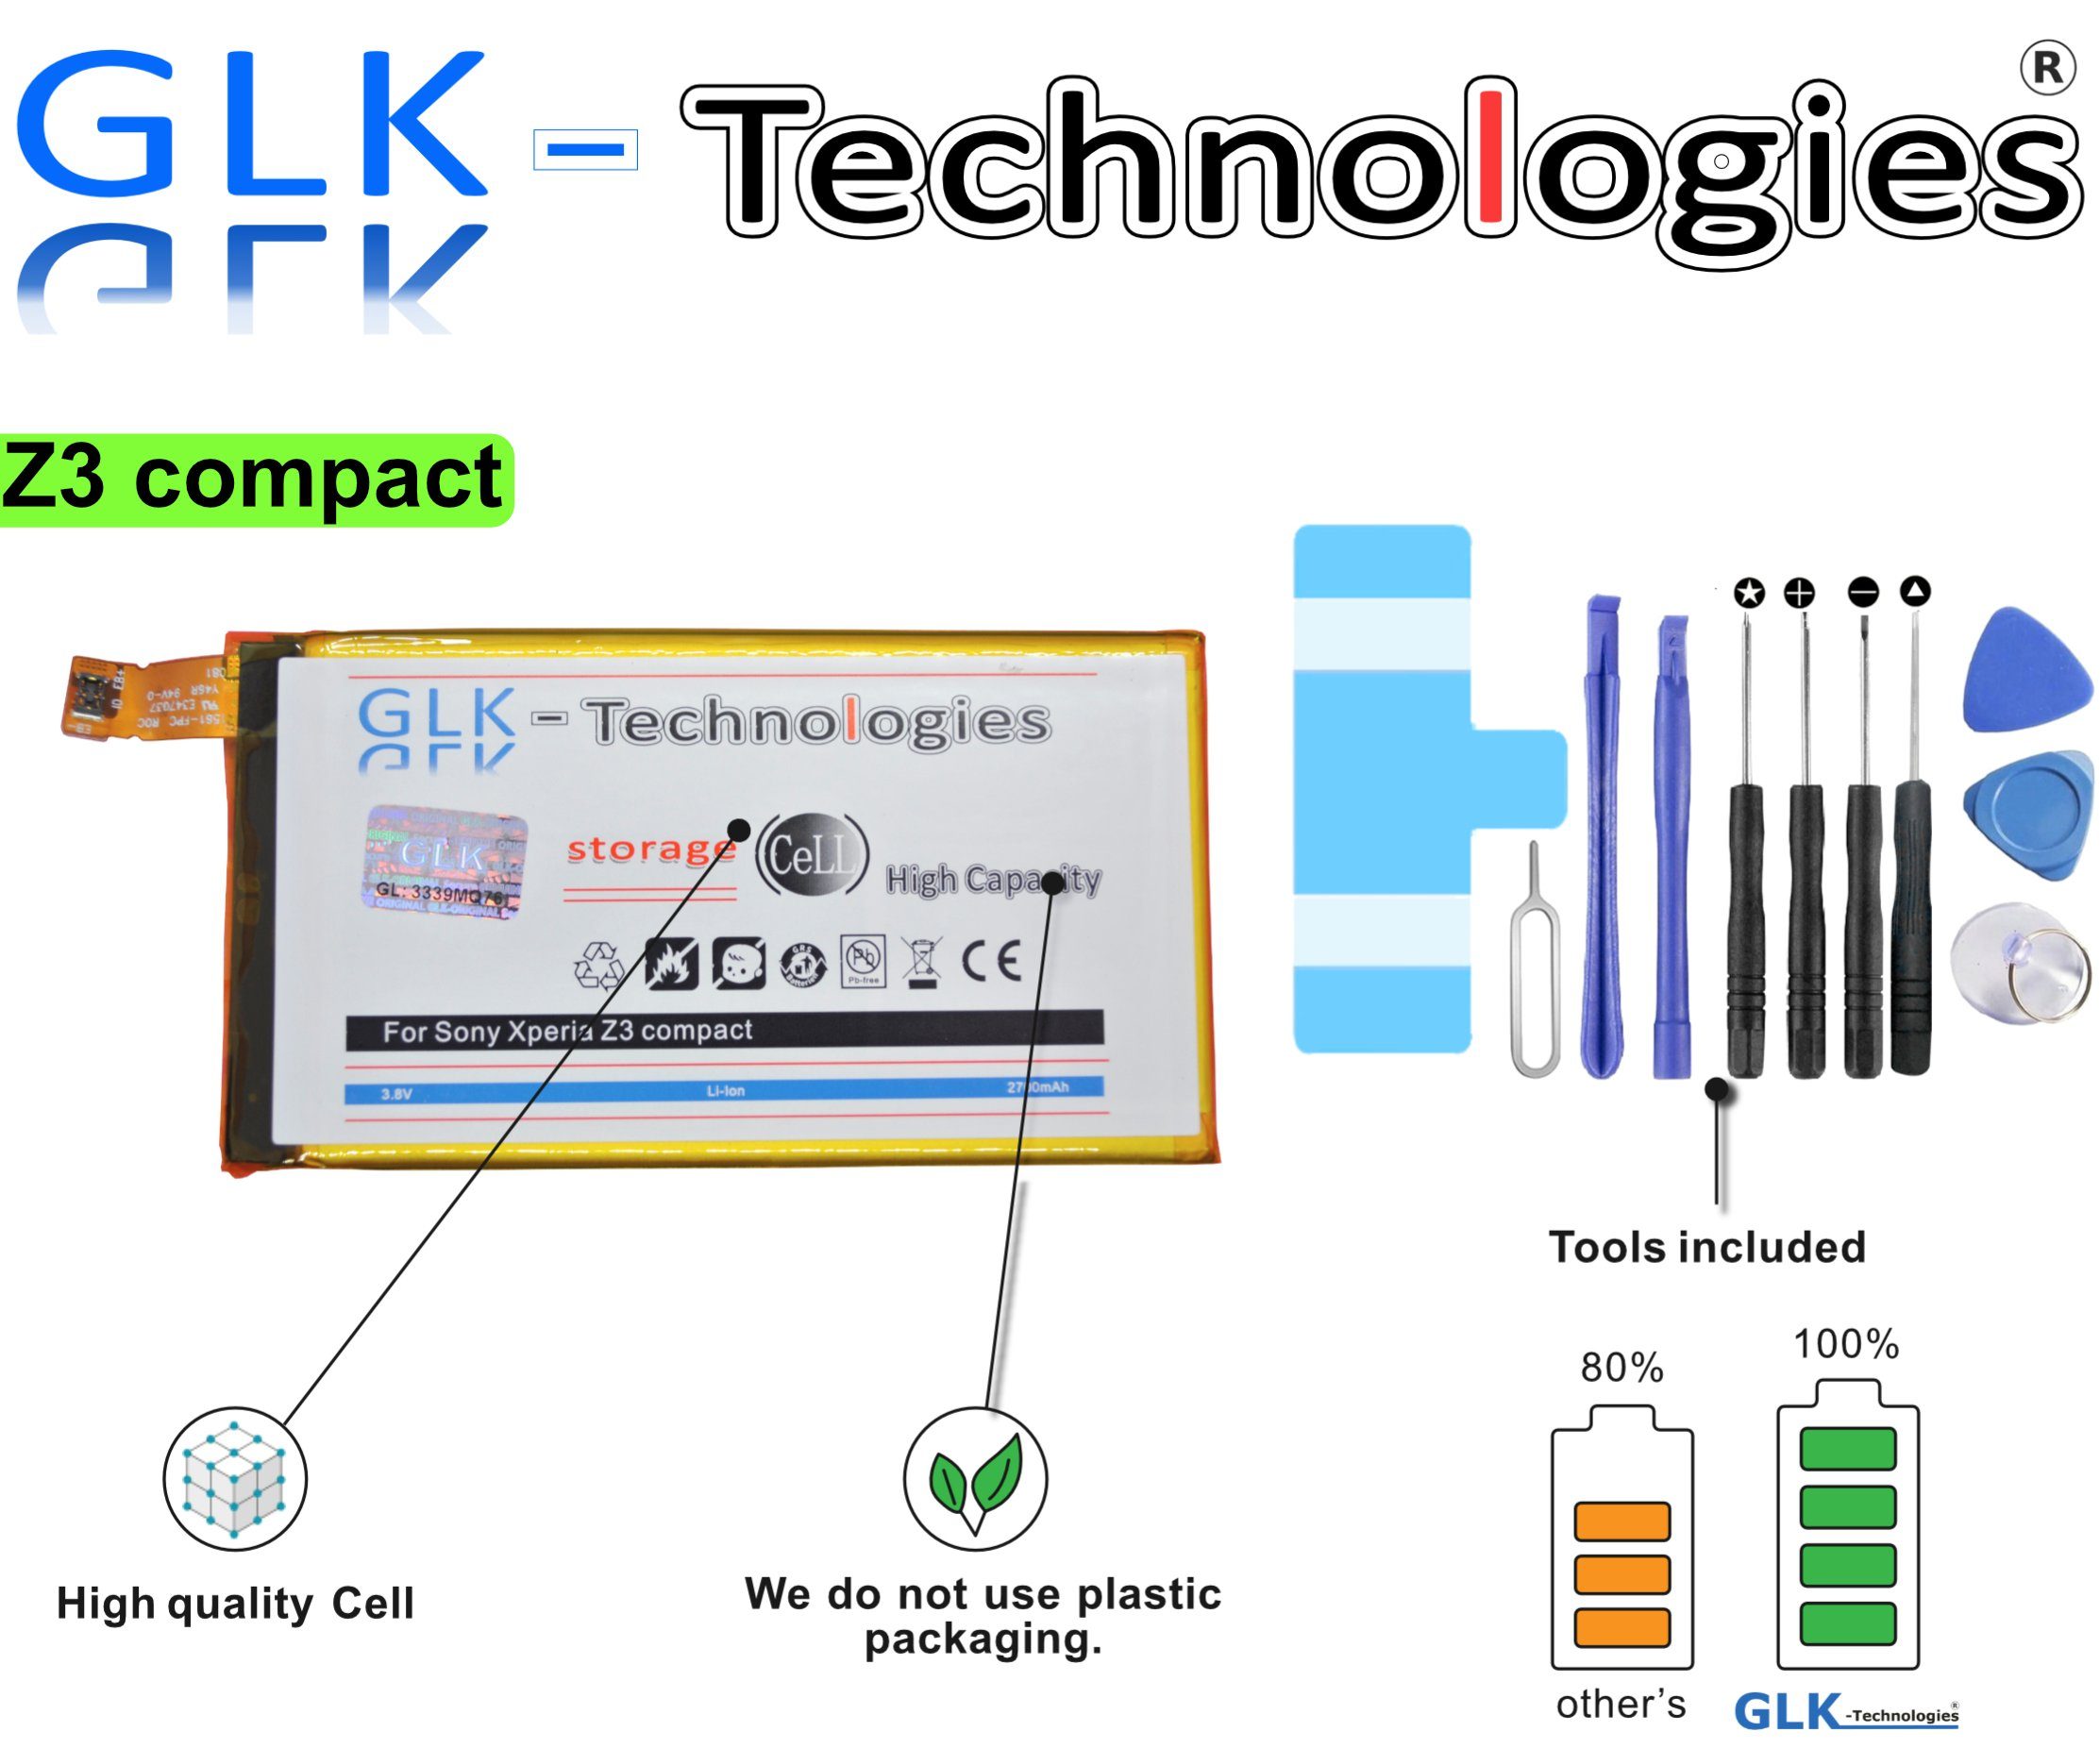 GLK-Technologies High Power Ersatzakku kompatibel mit Sony Xperia Z3 Compact E5803 E5823 LIS1594ERPC, Original GLK-Technologies Battery, accu, 2700 mAh Akku, inkl. Werkzeug Set Kit Smartphone-Akku 2700 mAh